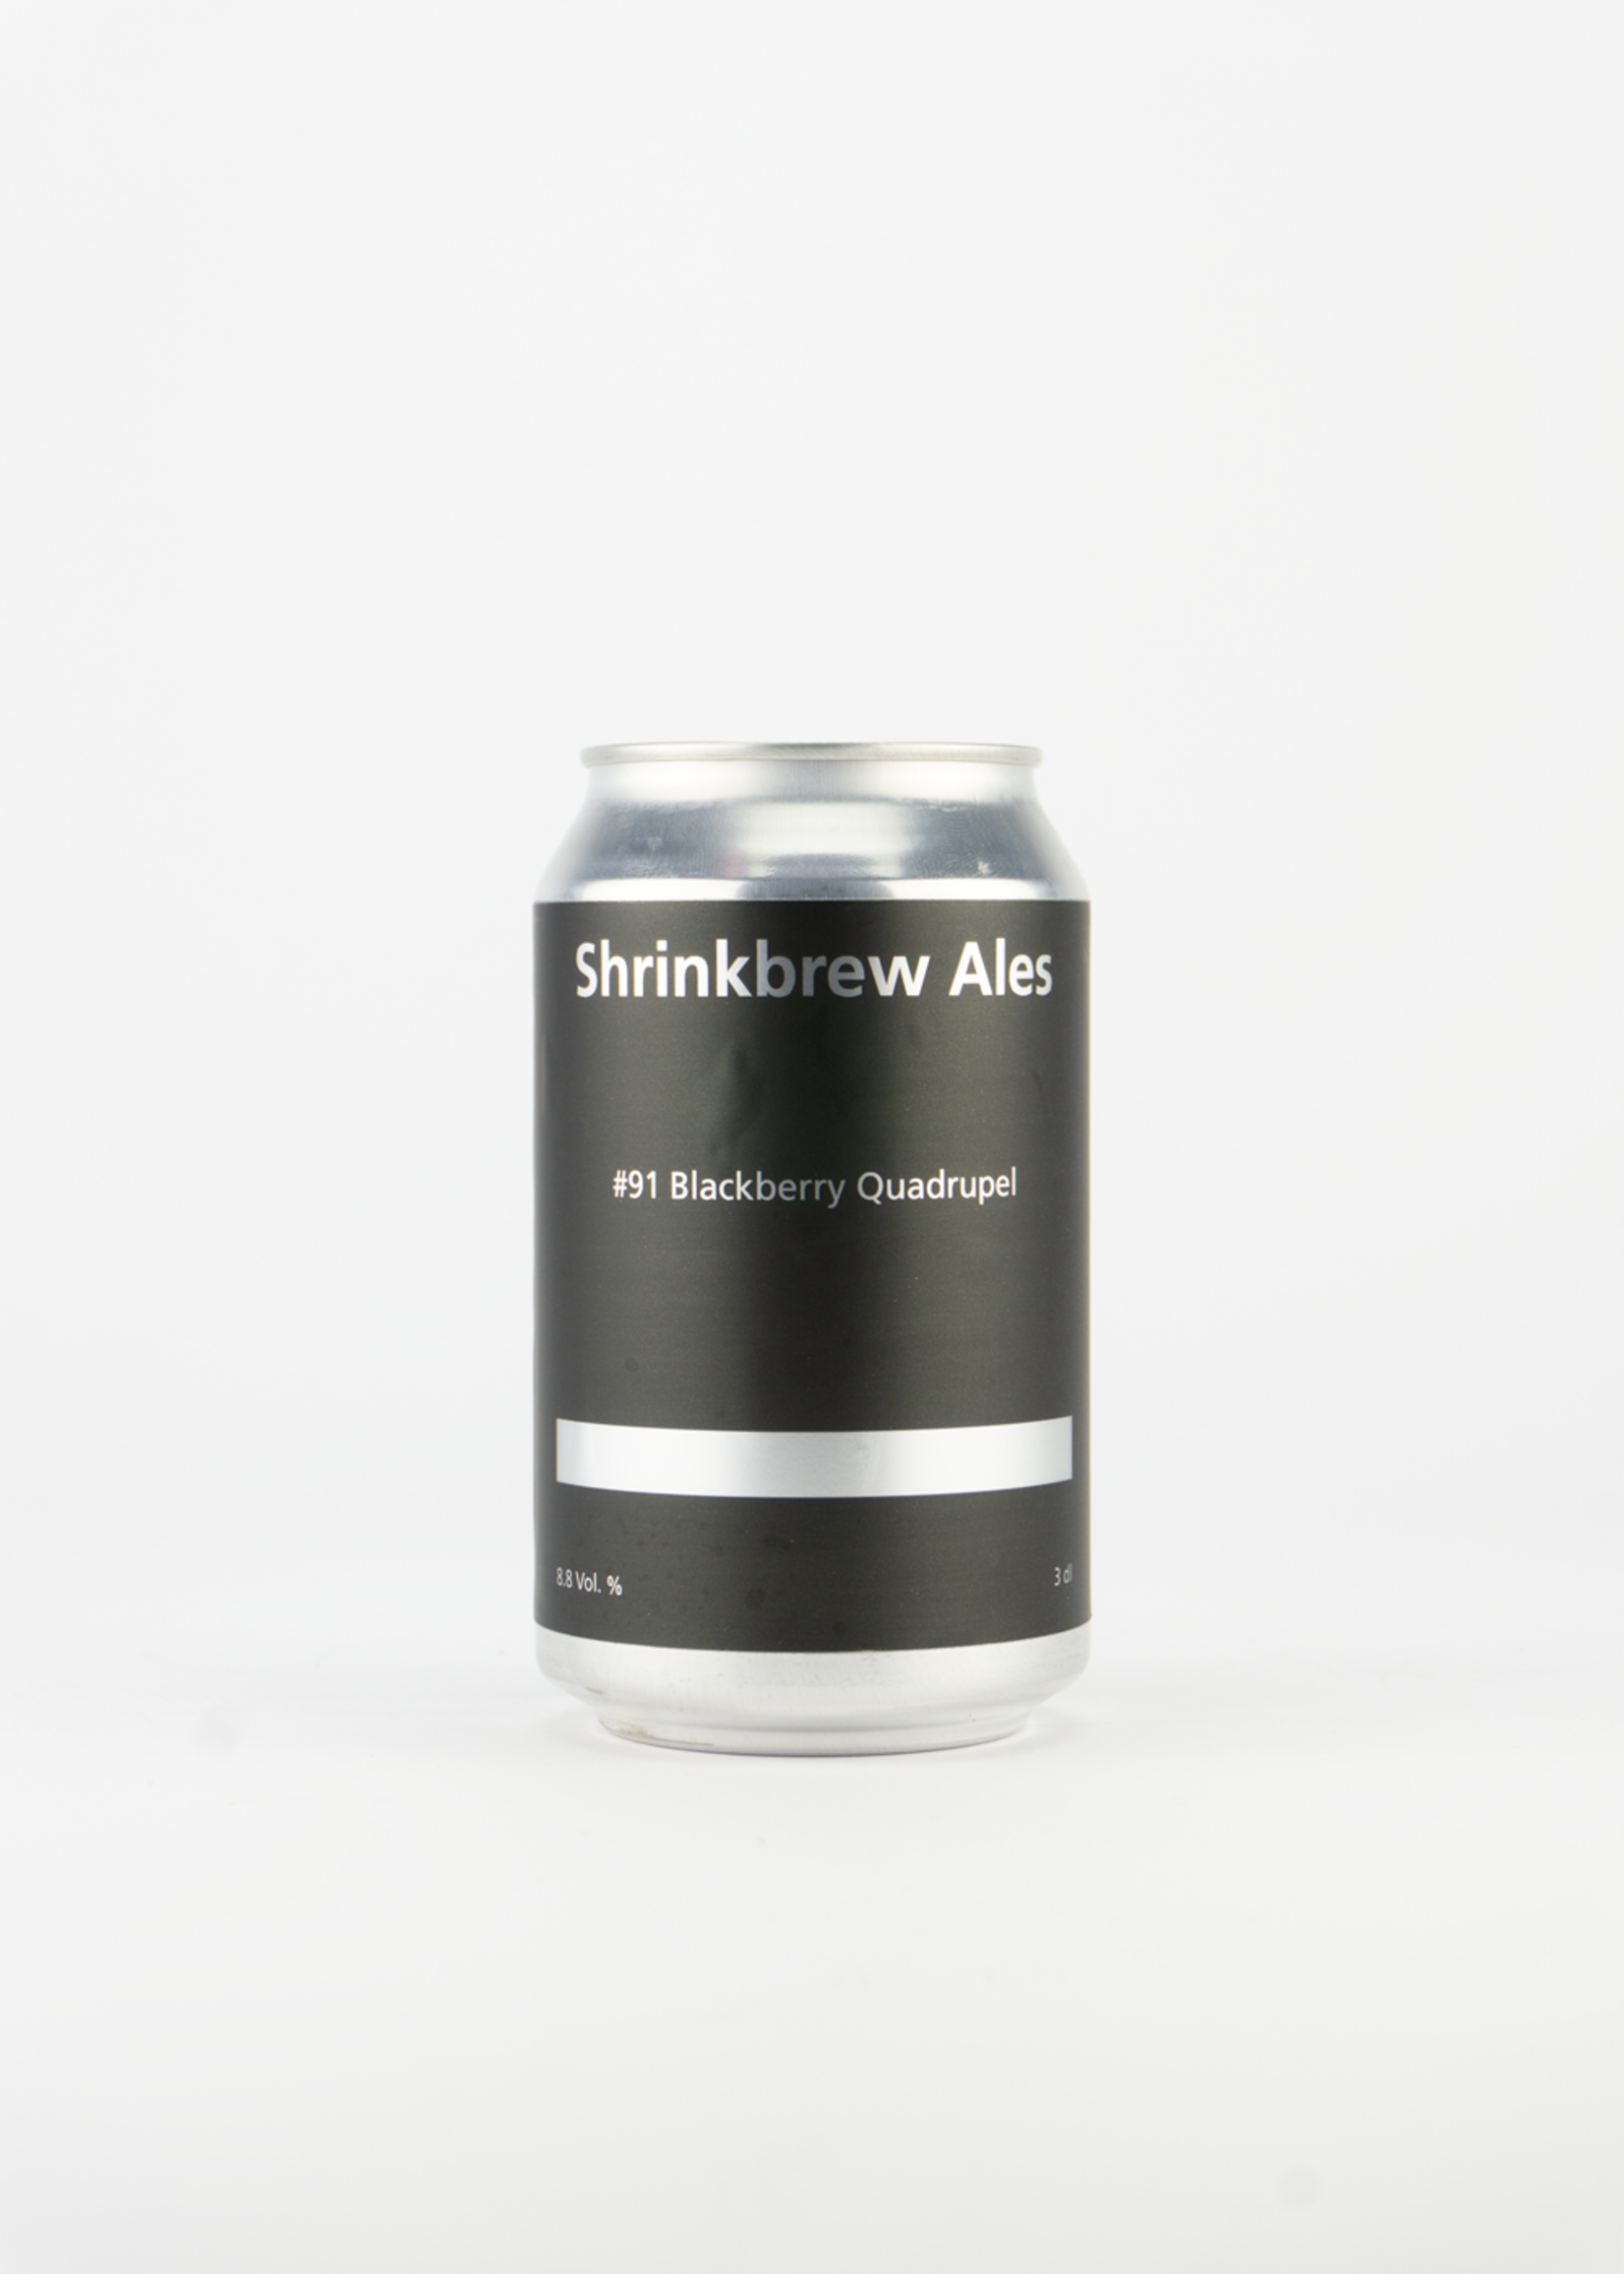 Shrinkbrew Ales #91 Blackberry Quadrupel